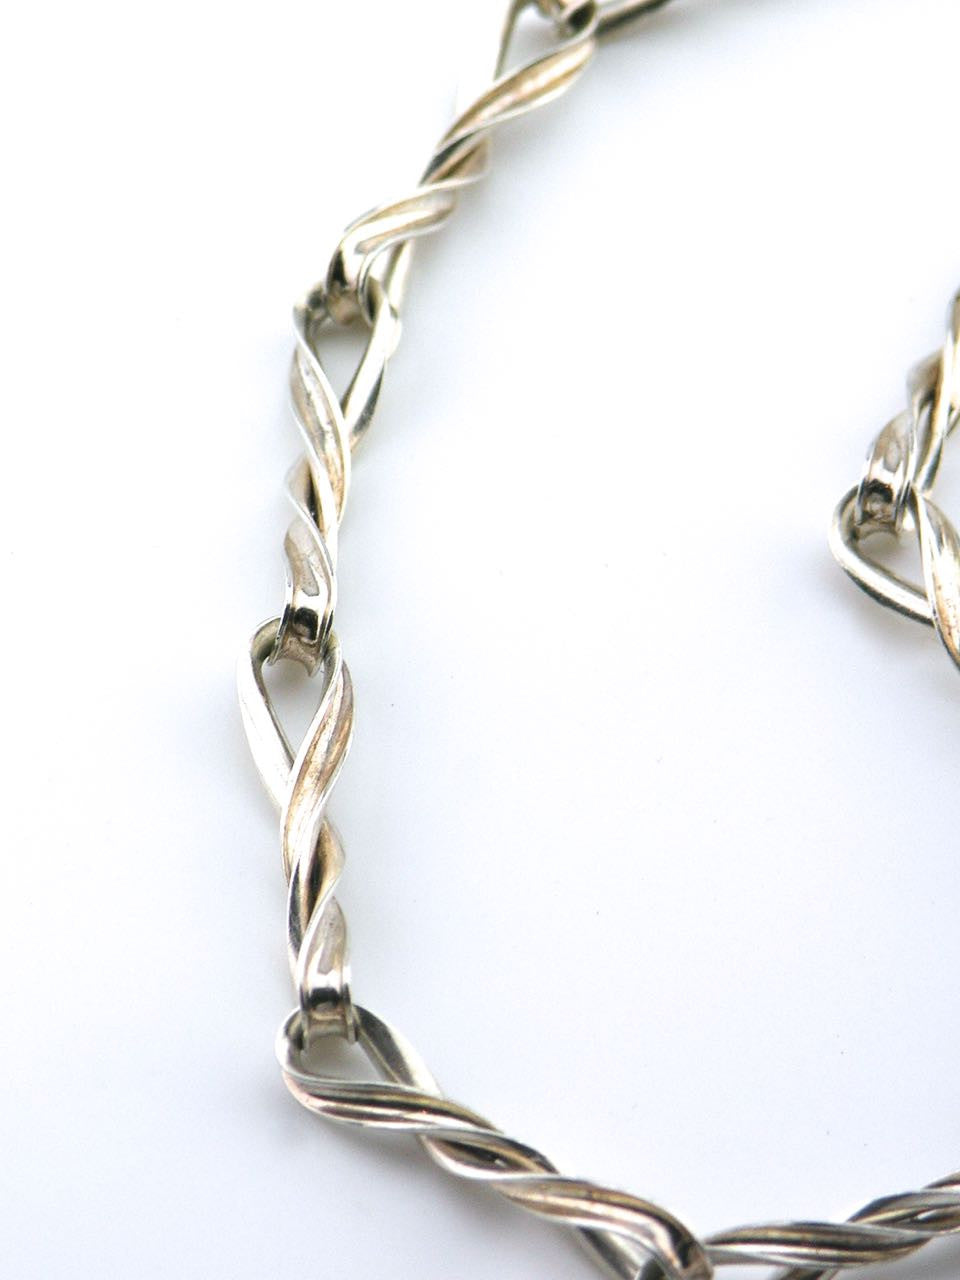 Italian silver long "figure of eight" twist link necklace